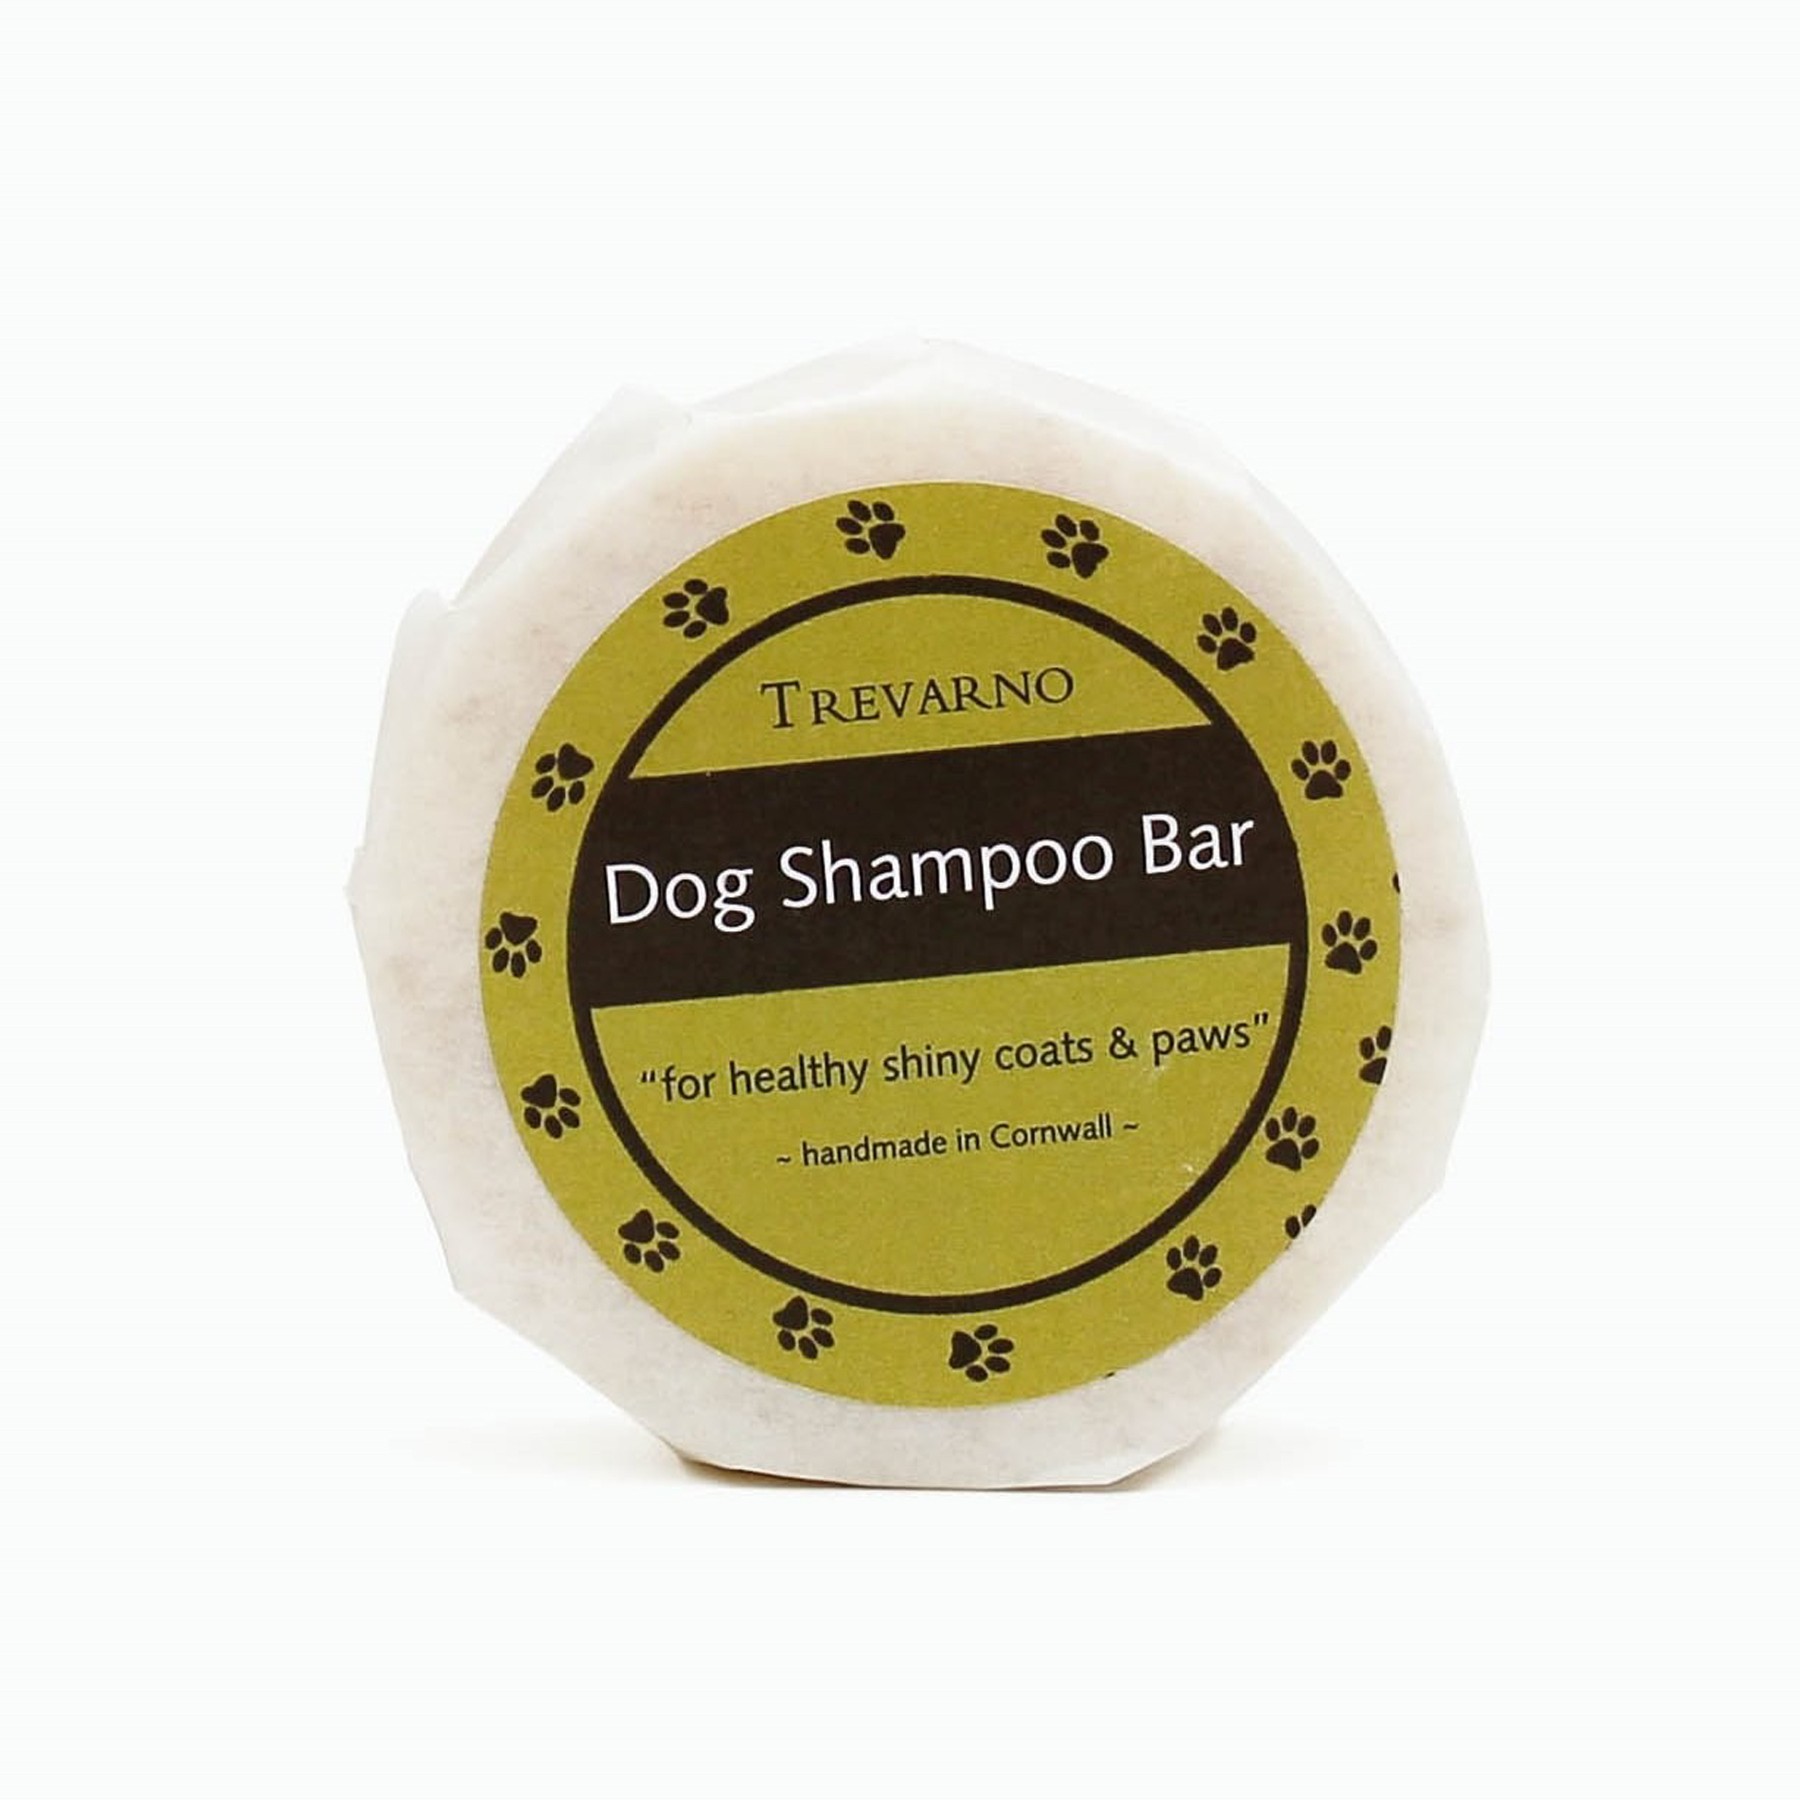 Trevarno Dog Shampoo Bar 75g